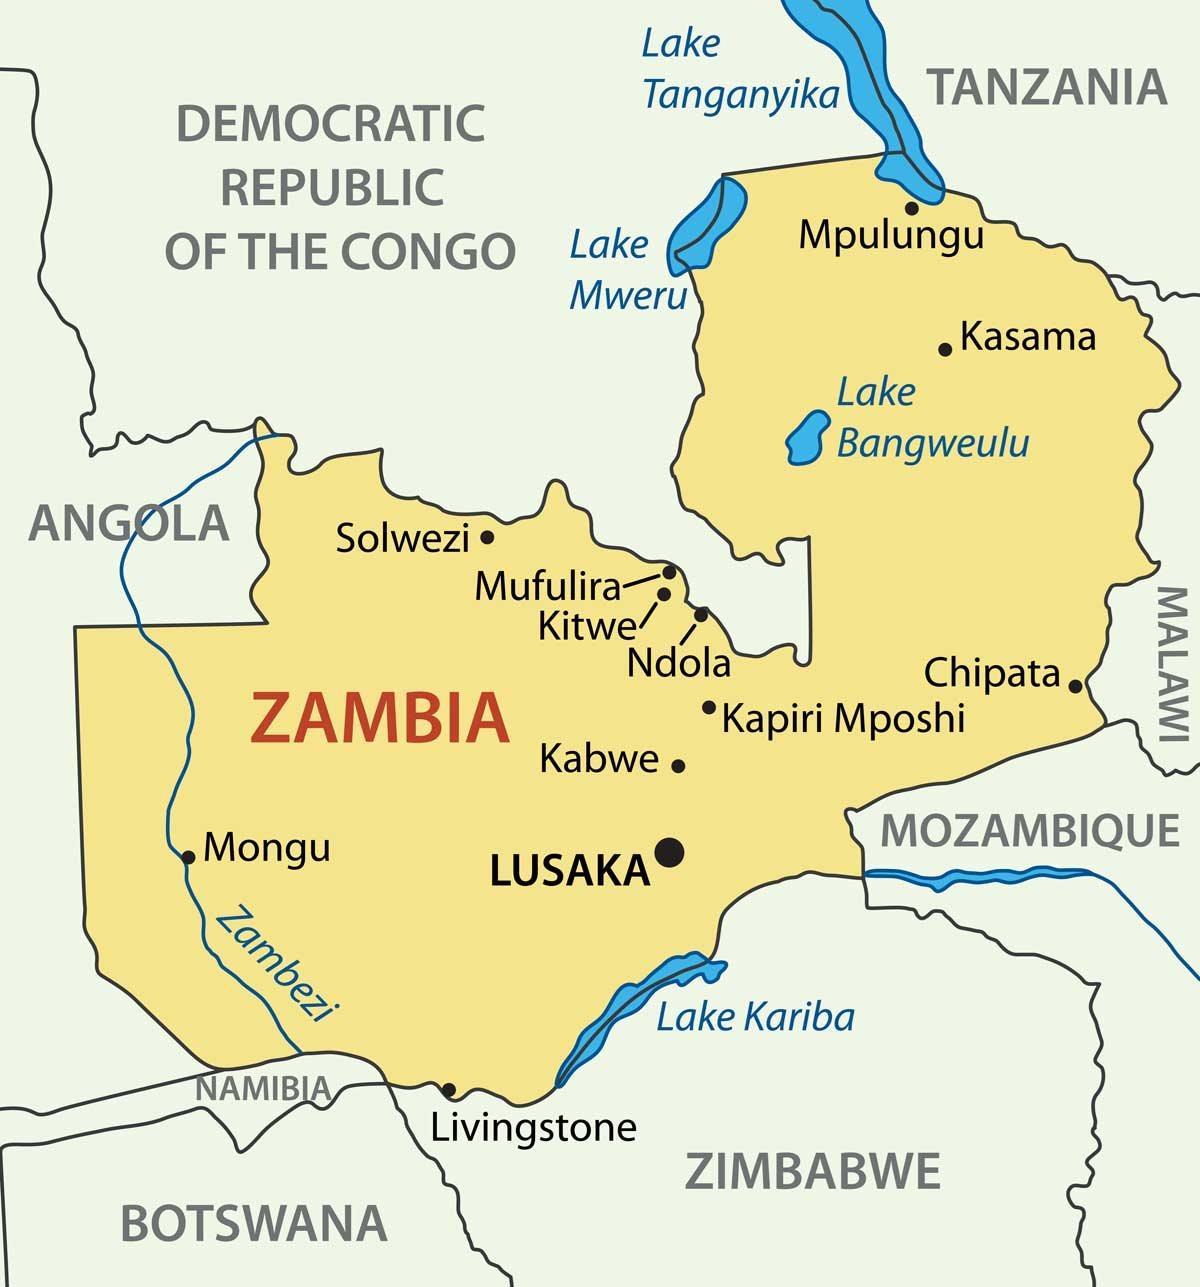 Mapa kitwe Zambija